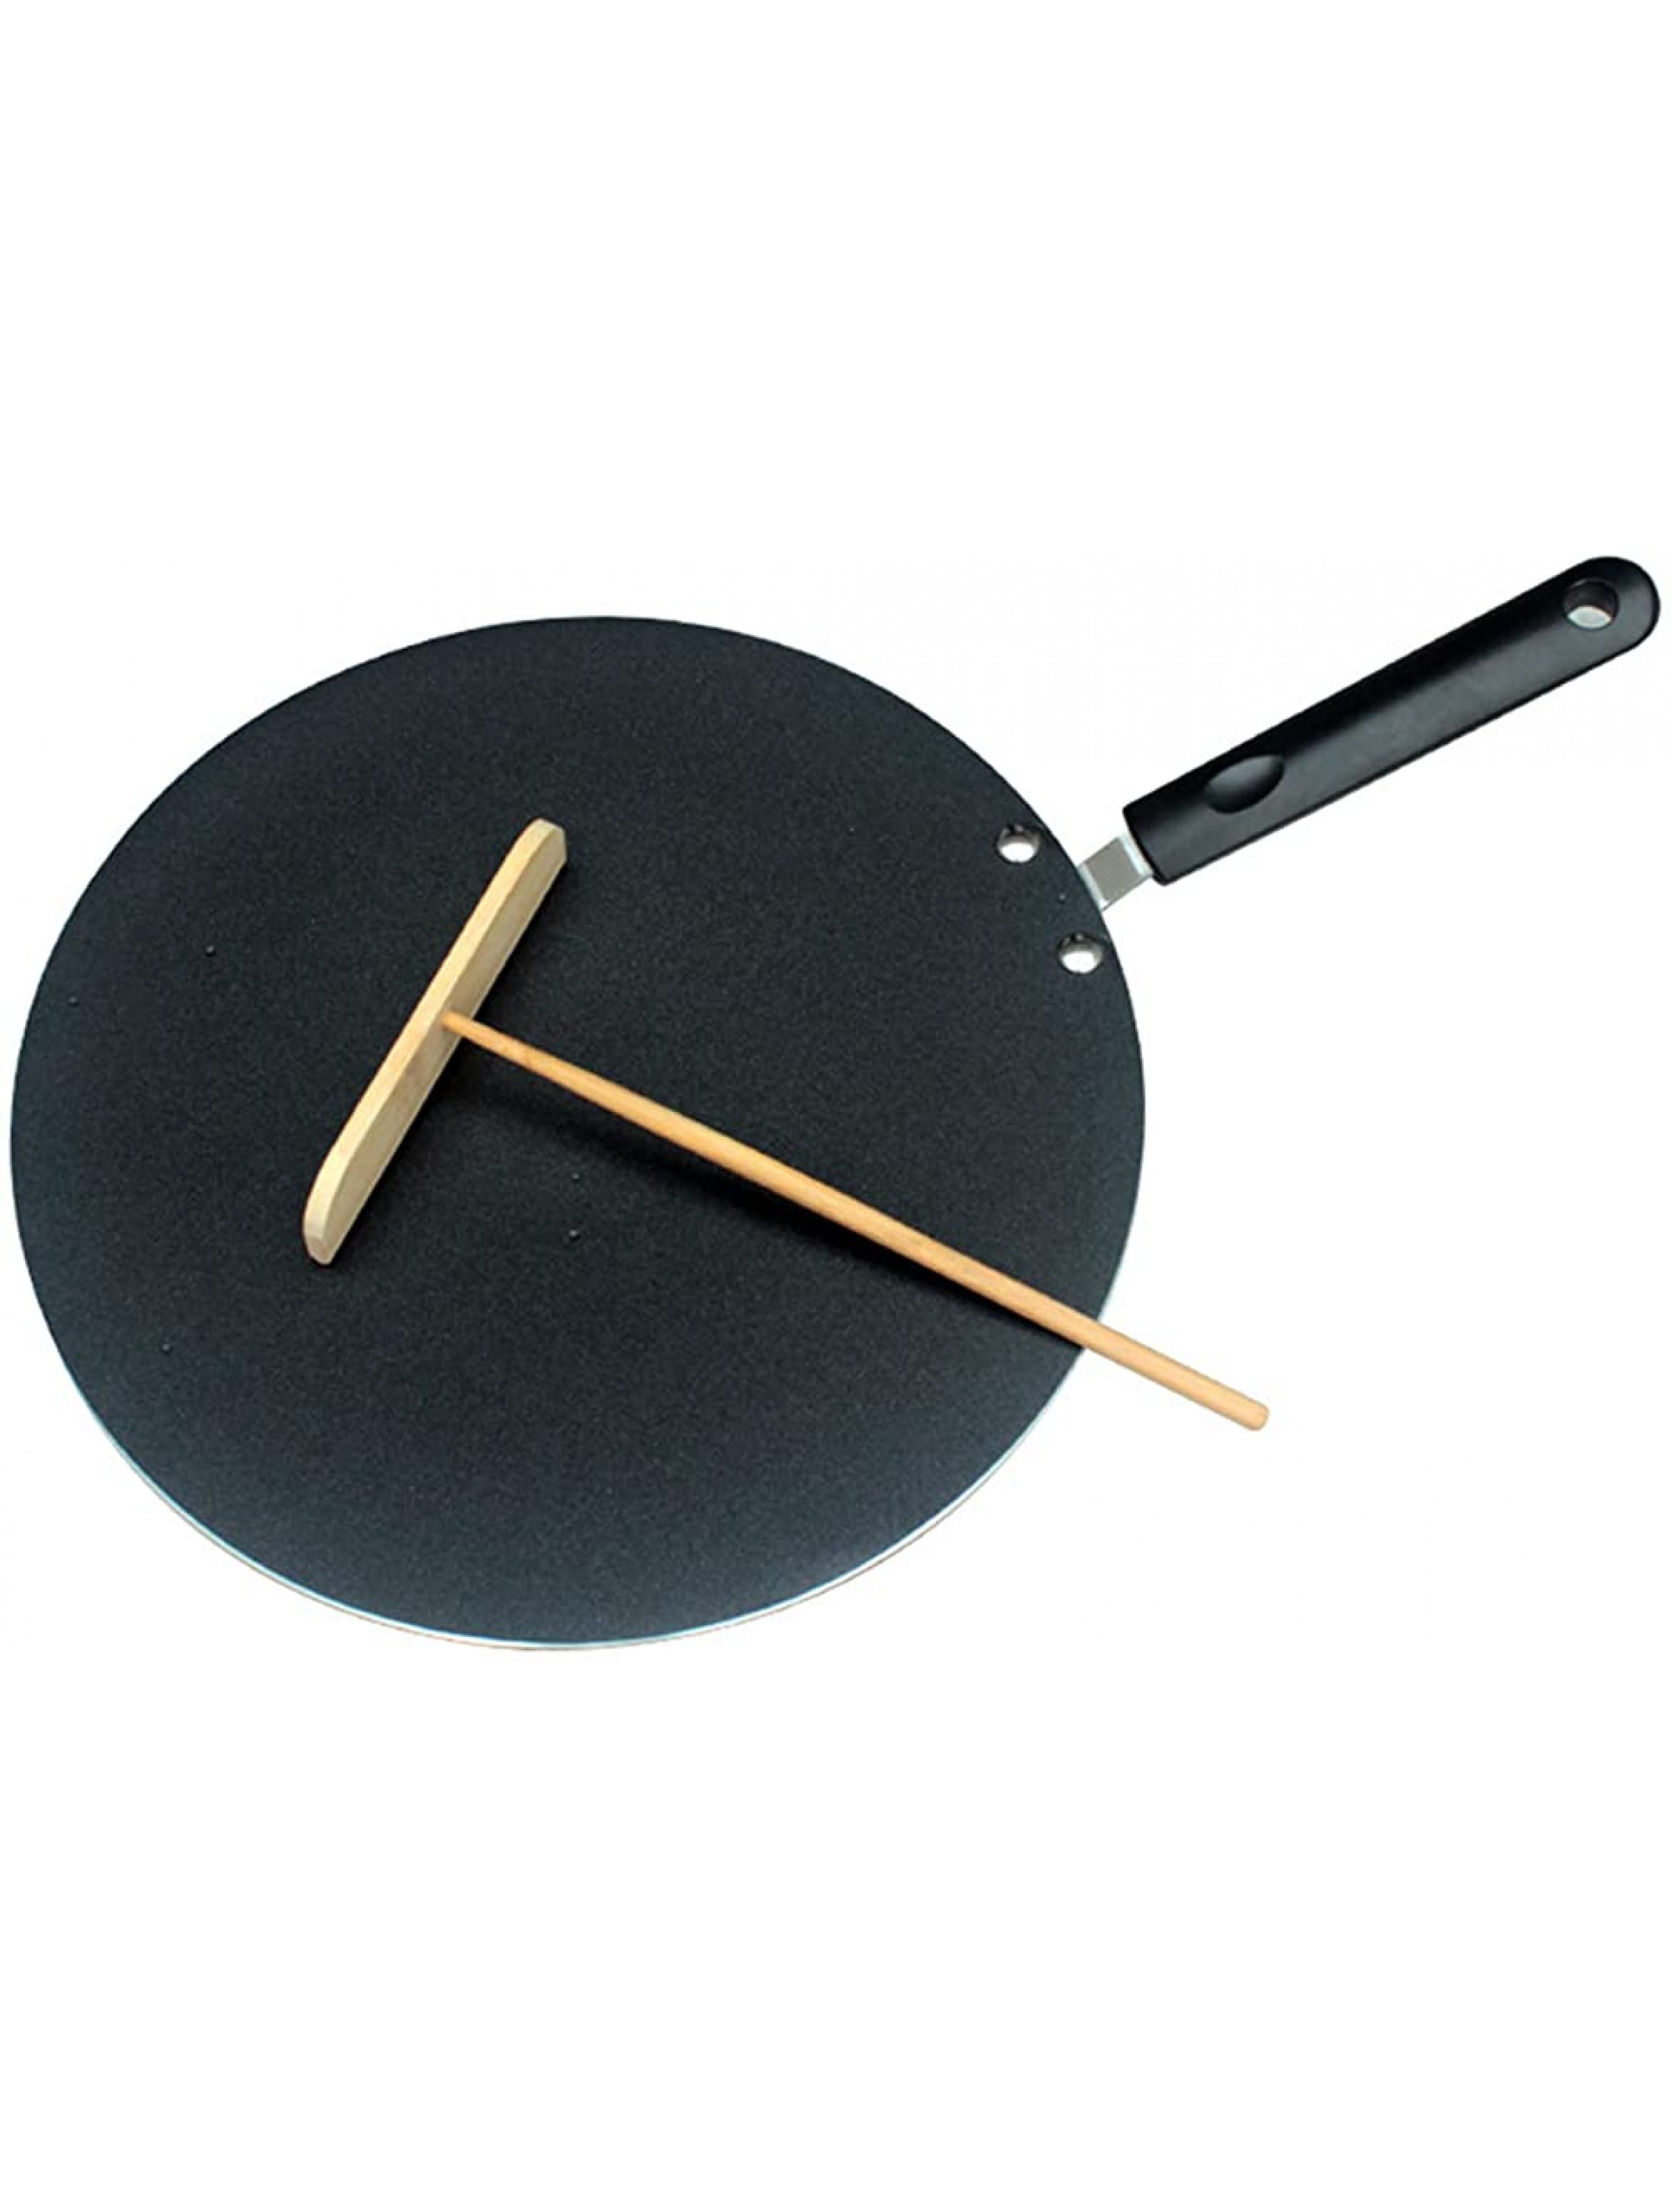 XANCrepe Pan 11.8 Non-Stick Flat Skillet Tawa Griddle Crepe Pan with Long Handle for Tortillas Pancakes Rotis Crepes - BU4MDMV4S